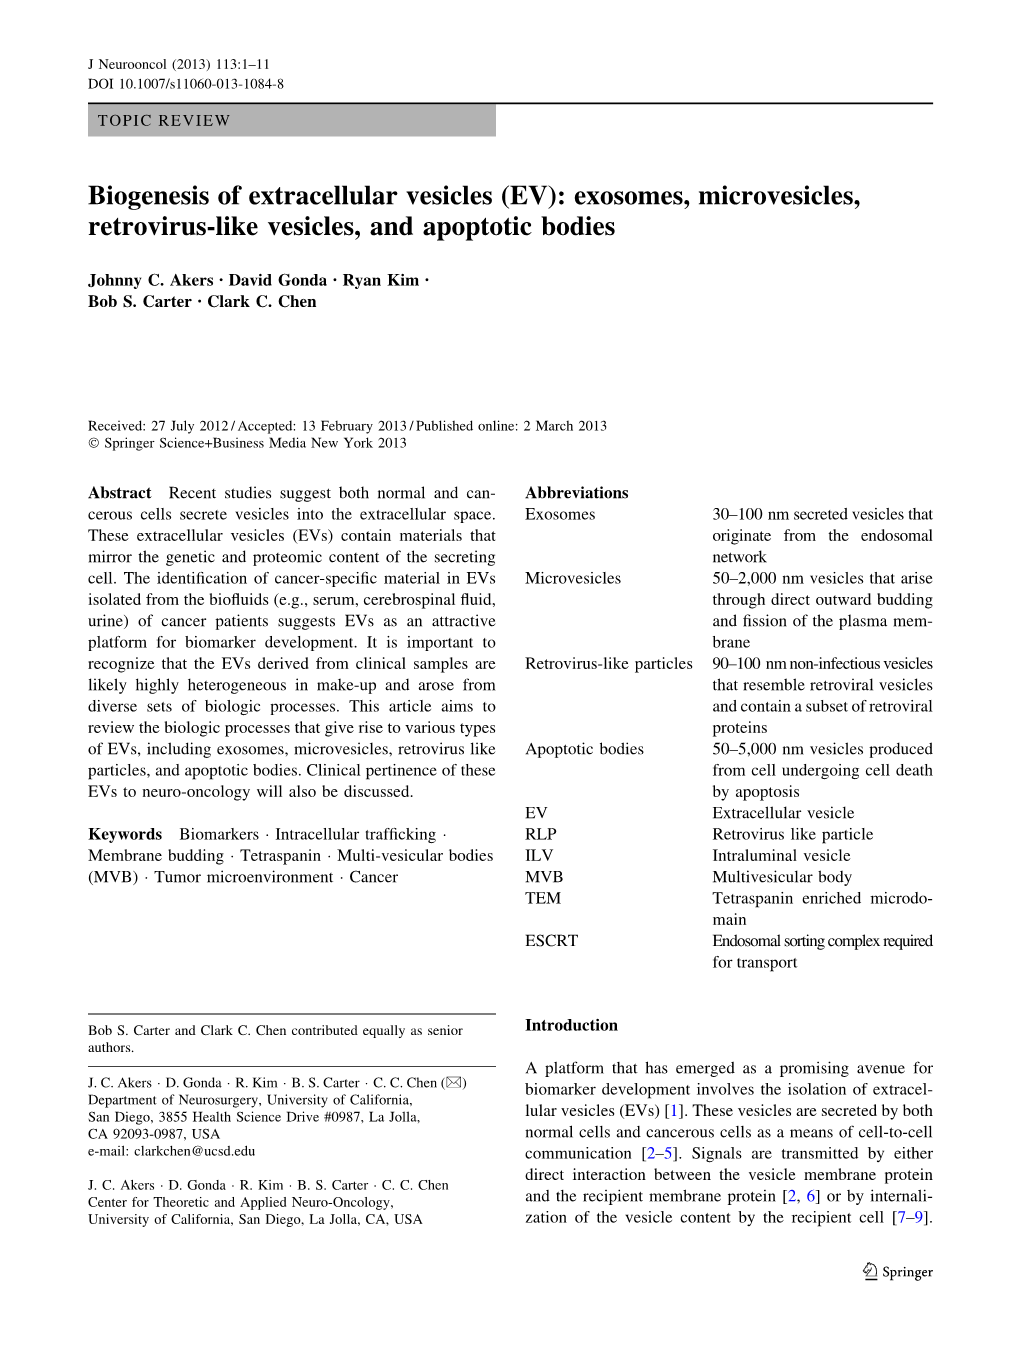 Biogenesis of Extracellular Vesicles (EV): Exosomes, Microvesicles, Retrovirus-Like Vesicles, and Apoptotic Bodies